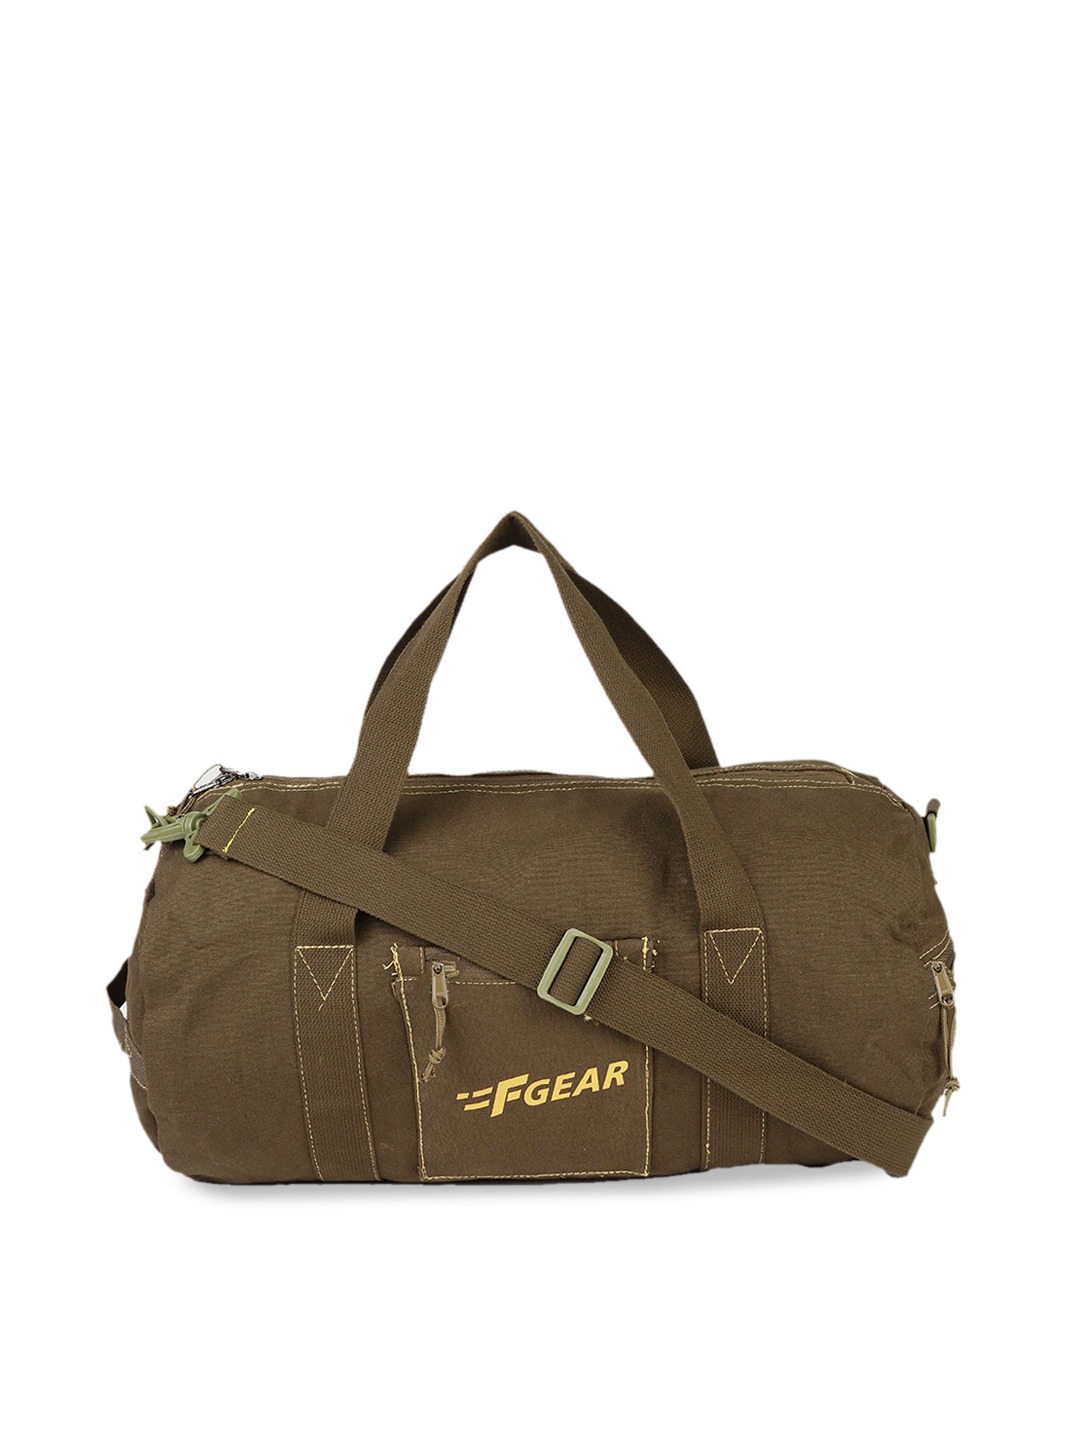 Accessories Duffel Bag | F Gear Unisex Olive Green Duffel Bag - RG63108